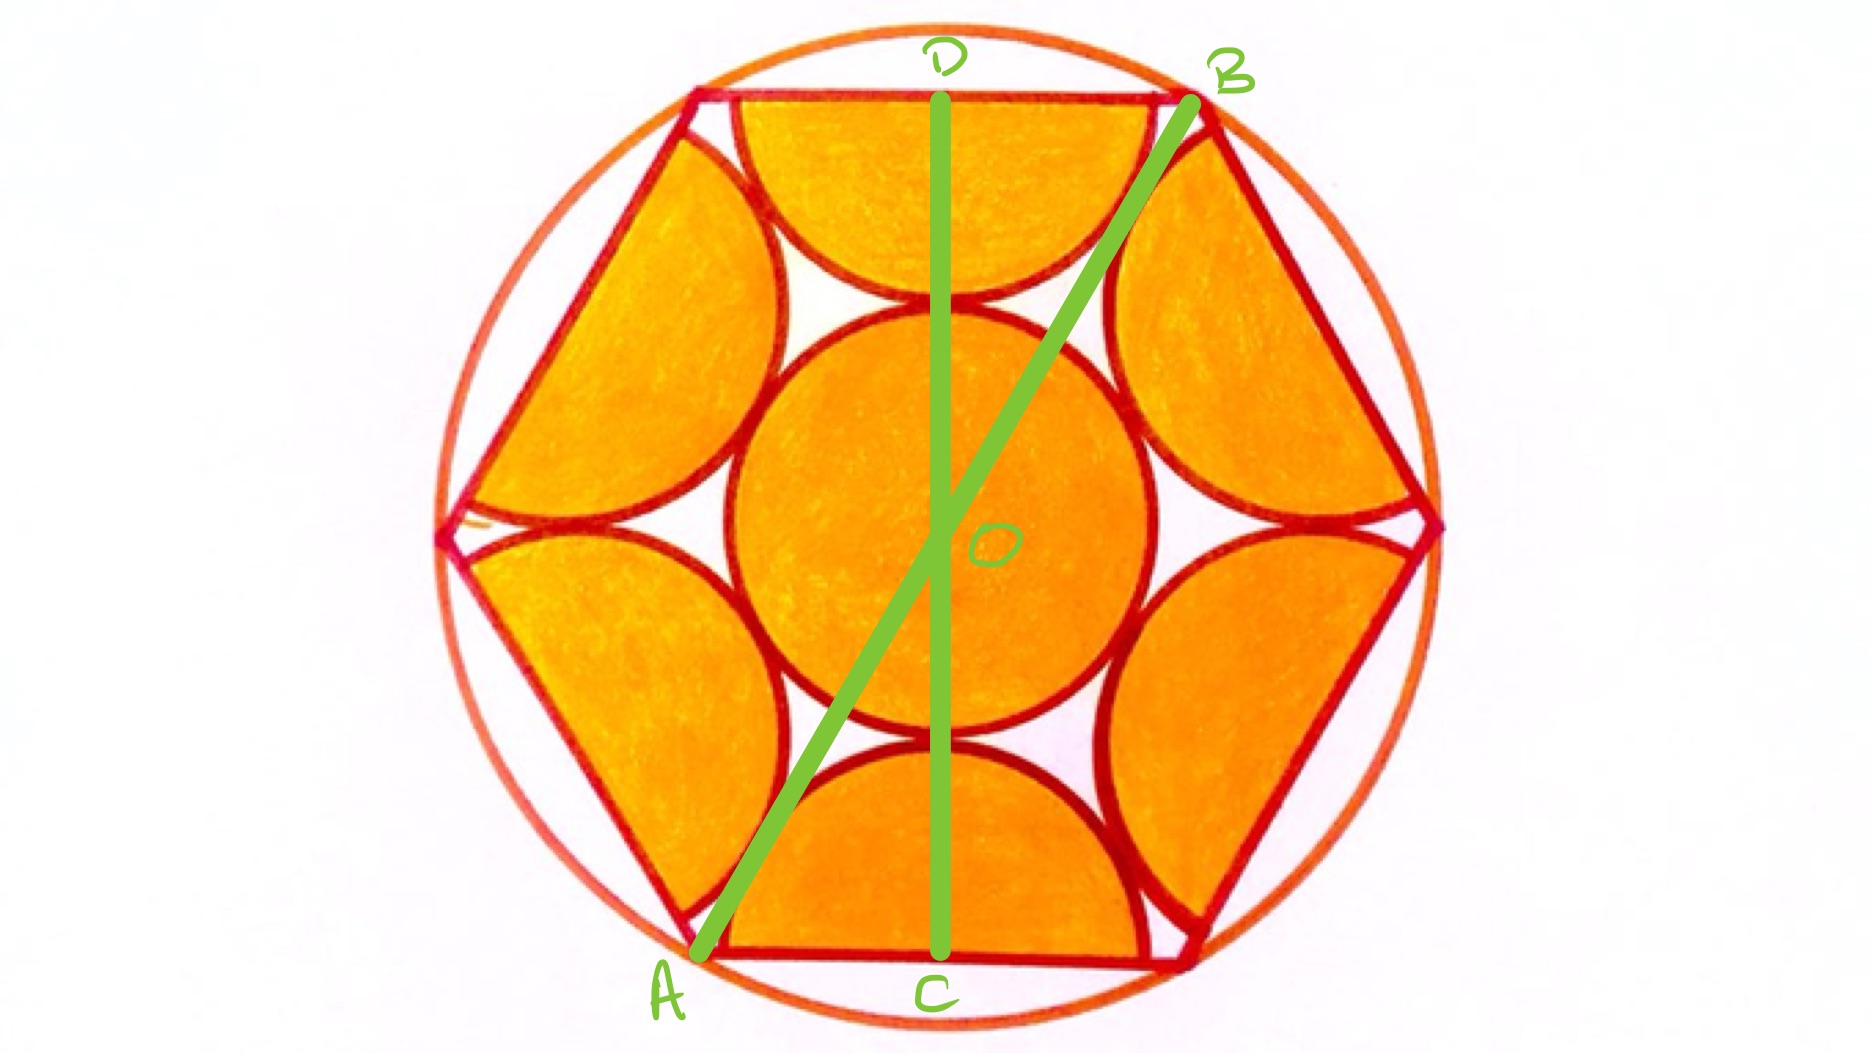 Six semi-circles inside a hexagon labelled